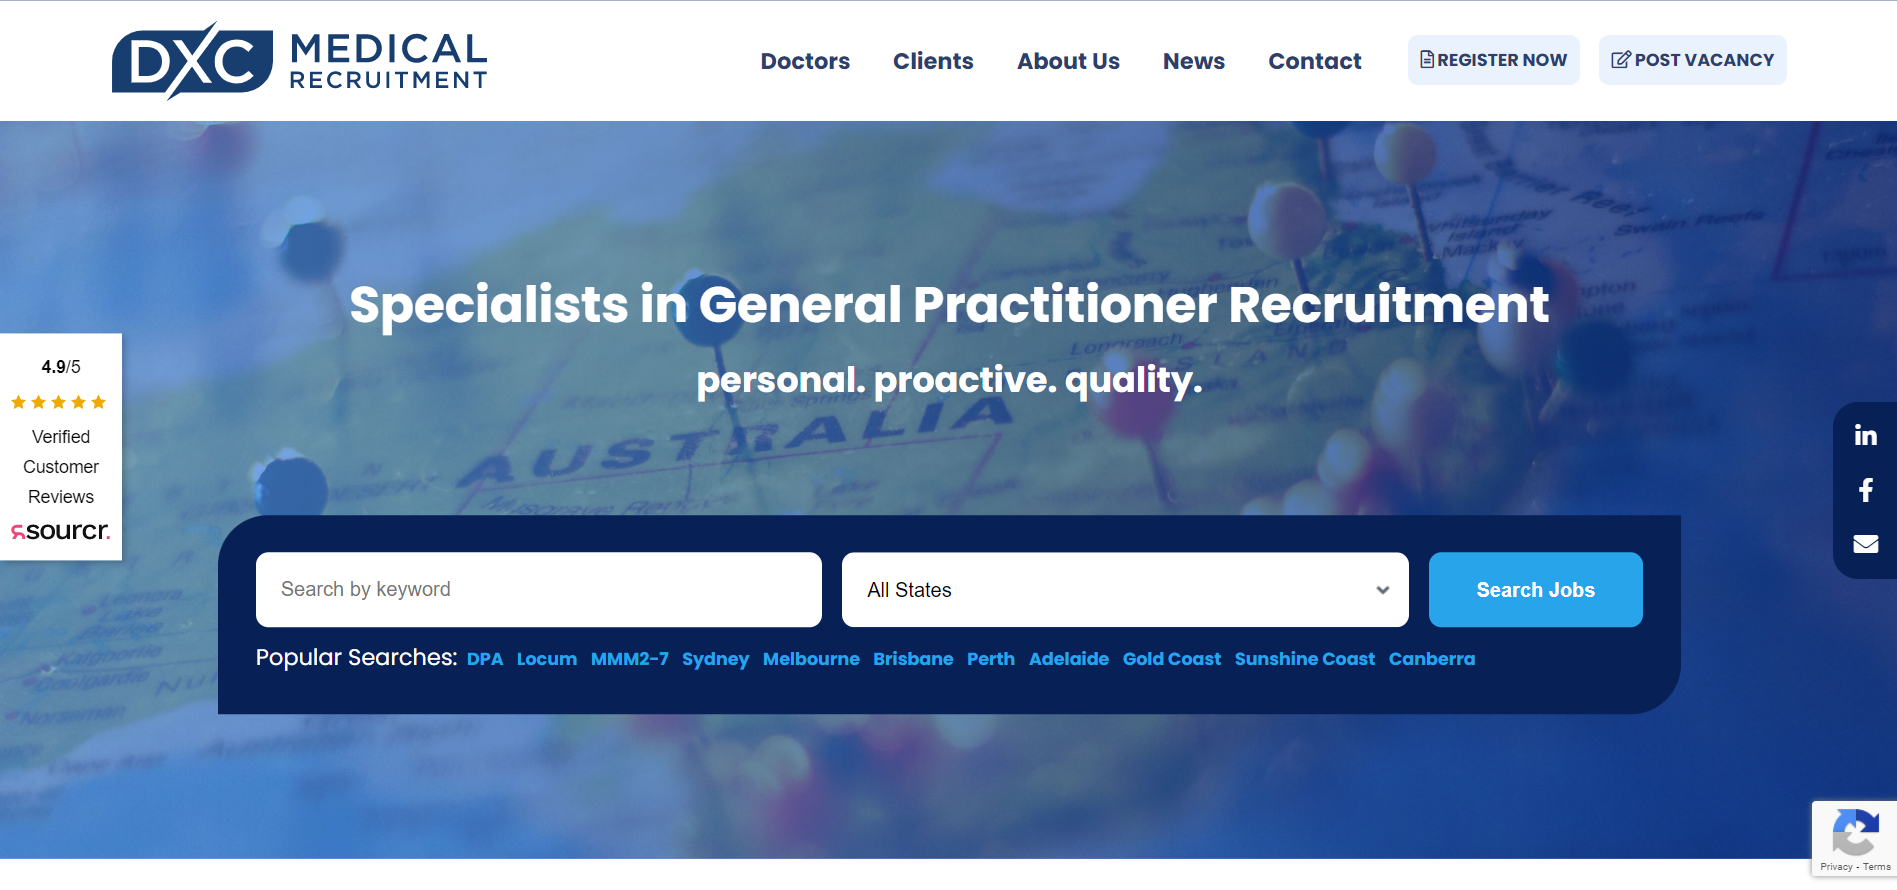 DXC Medical Recruitment Image